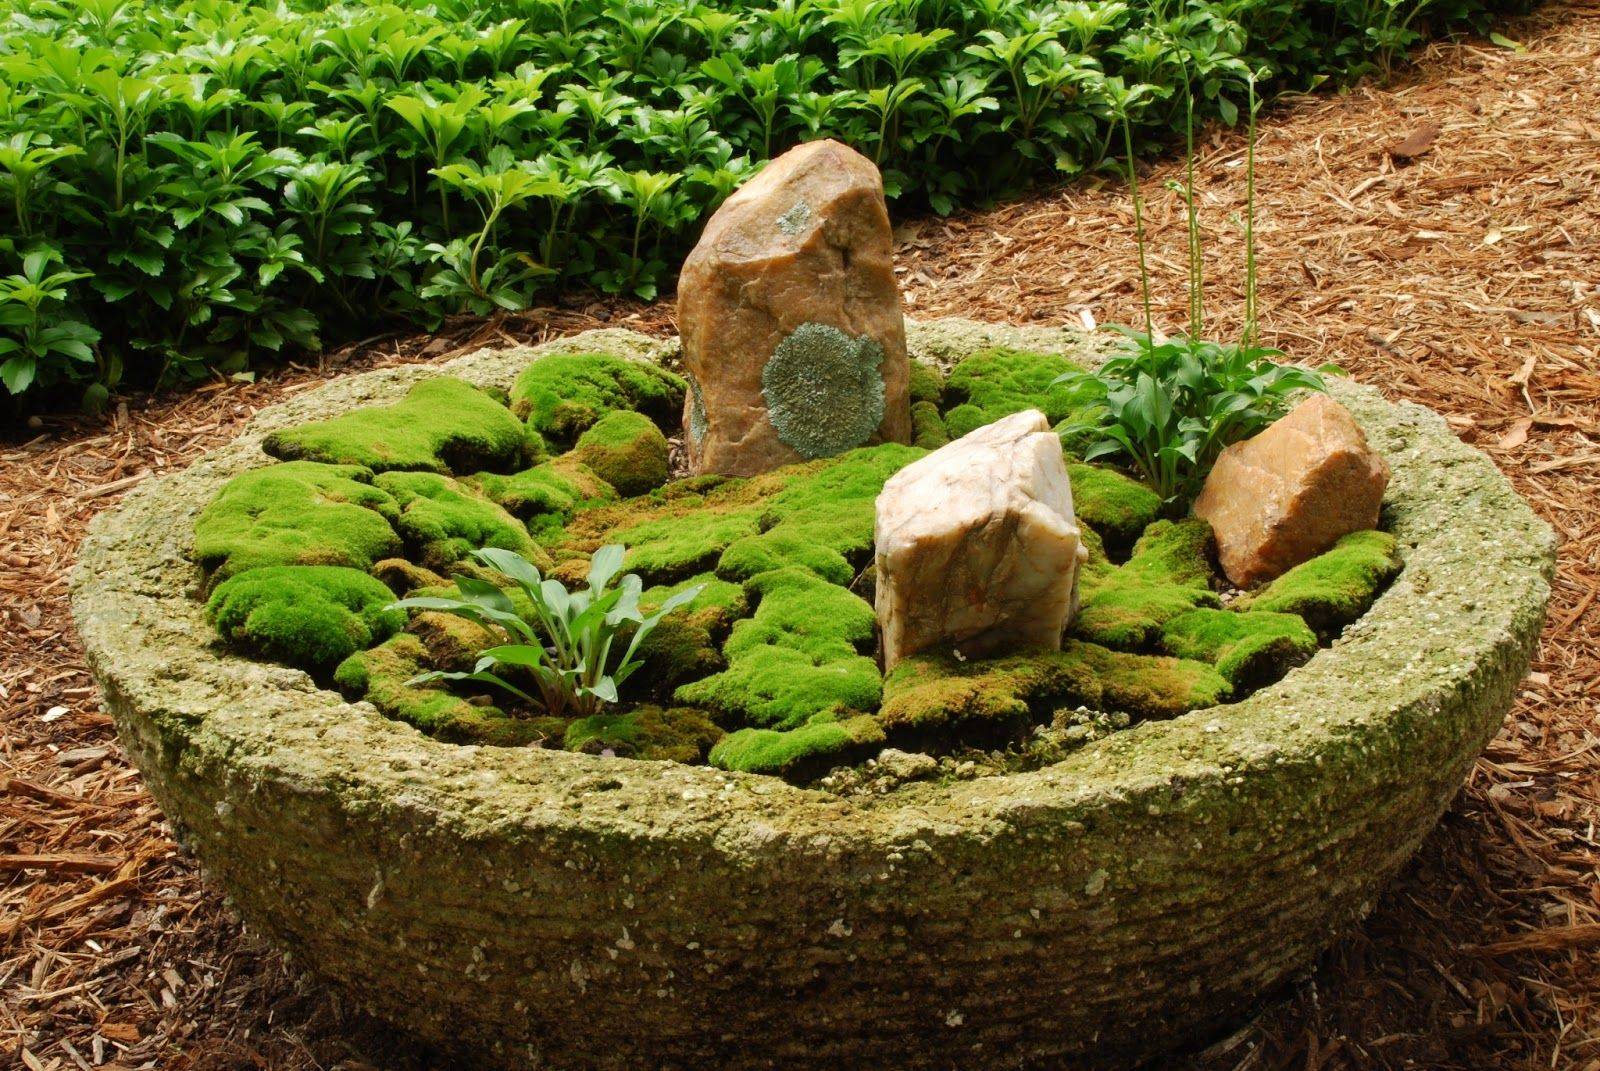 Miniature Garden